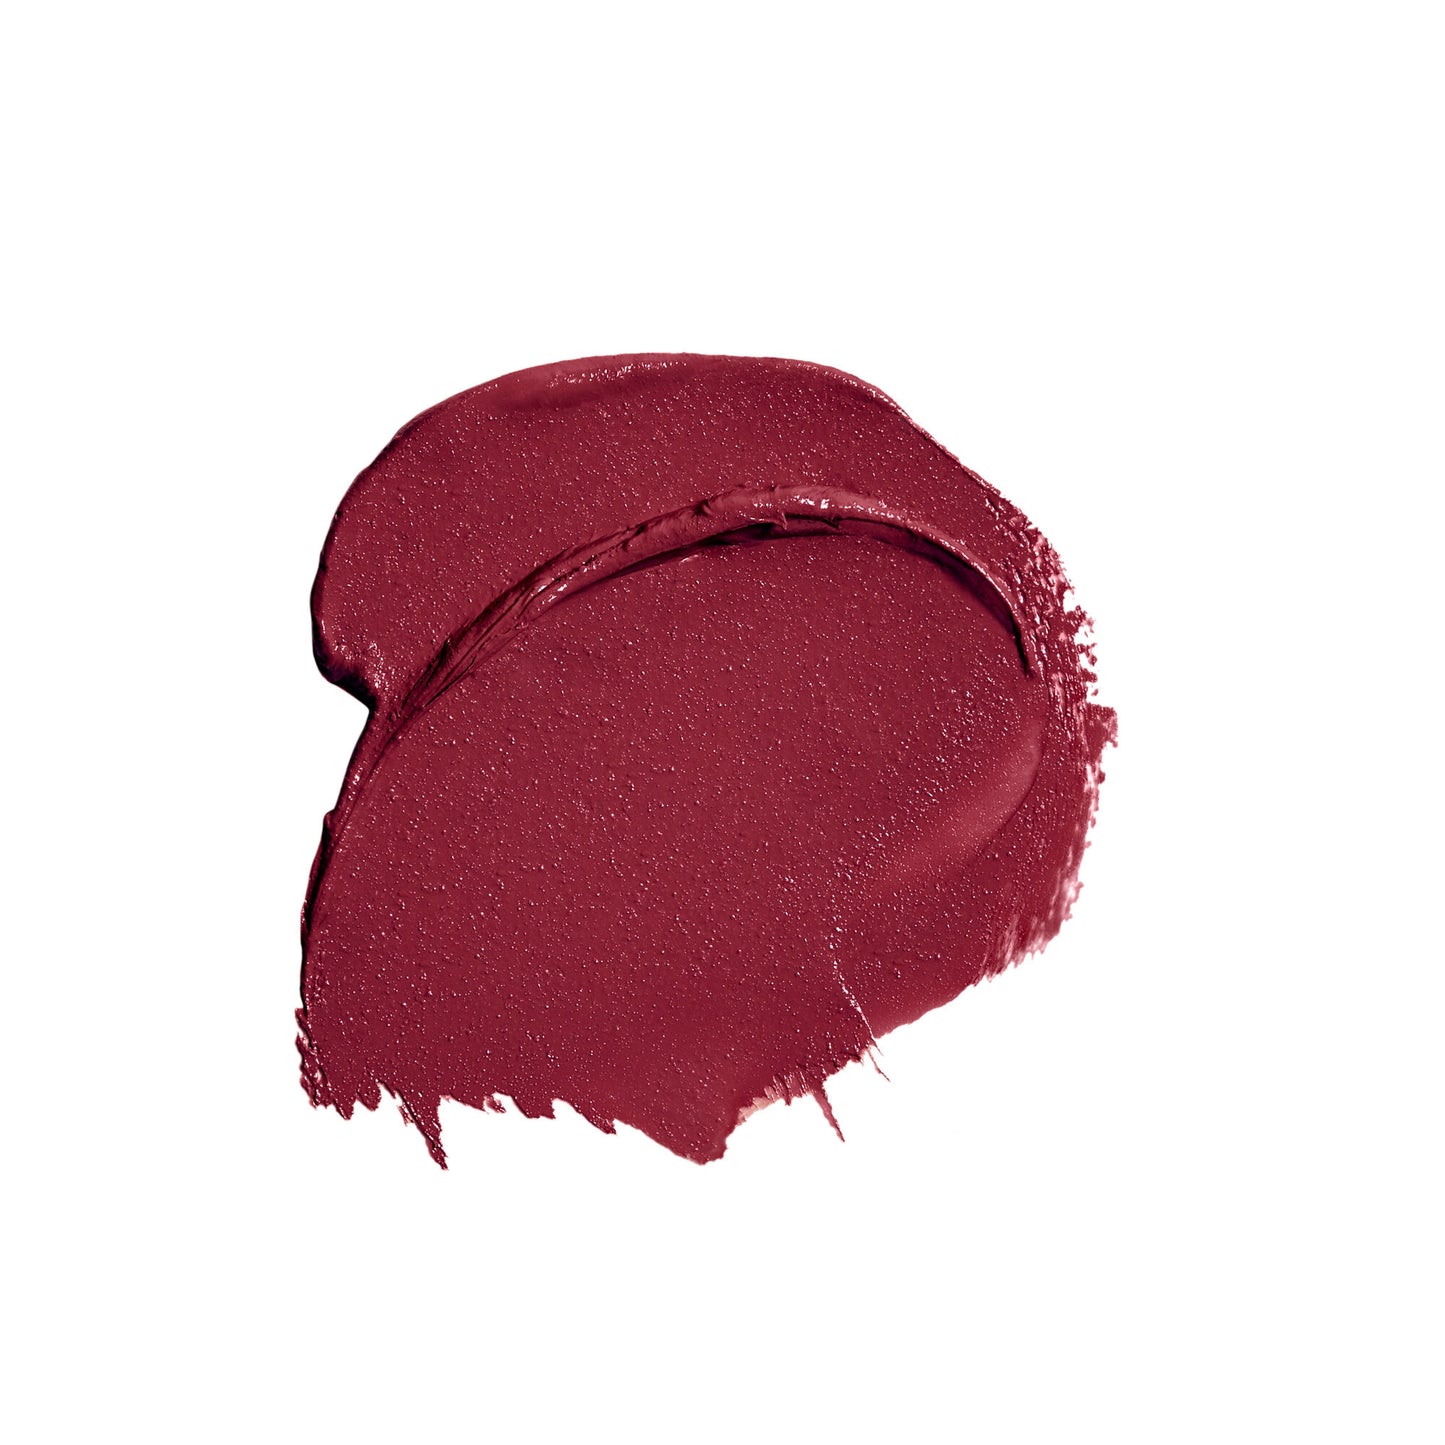 Honest Beauty 2-in-1 Melting Cream Blush+Lip Color | Plum Berry